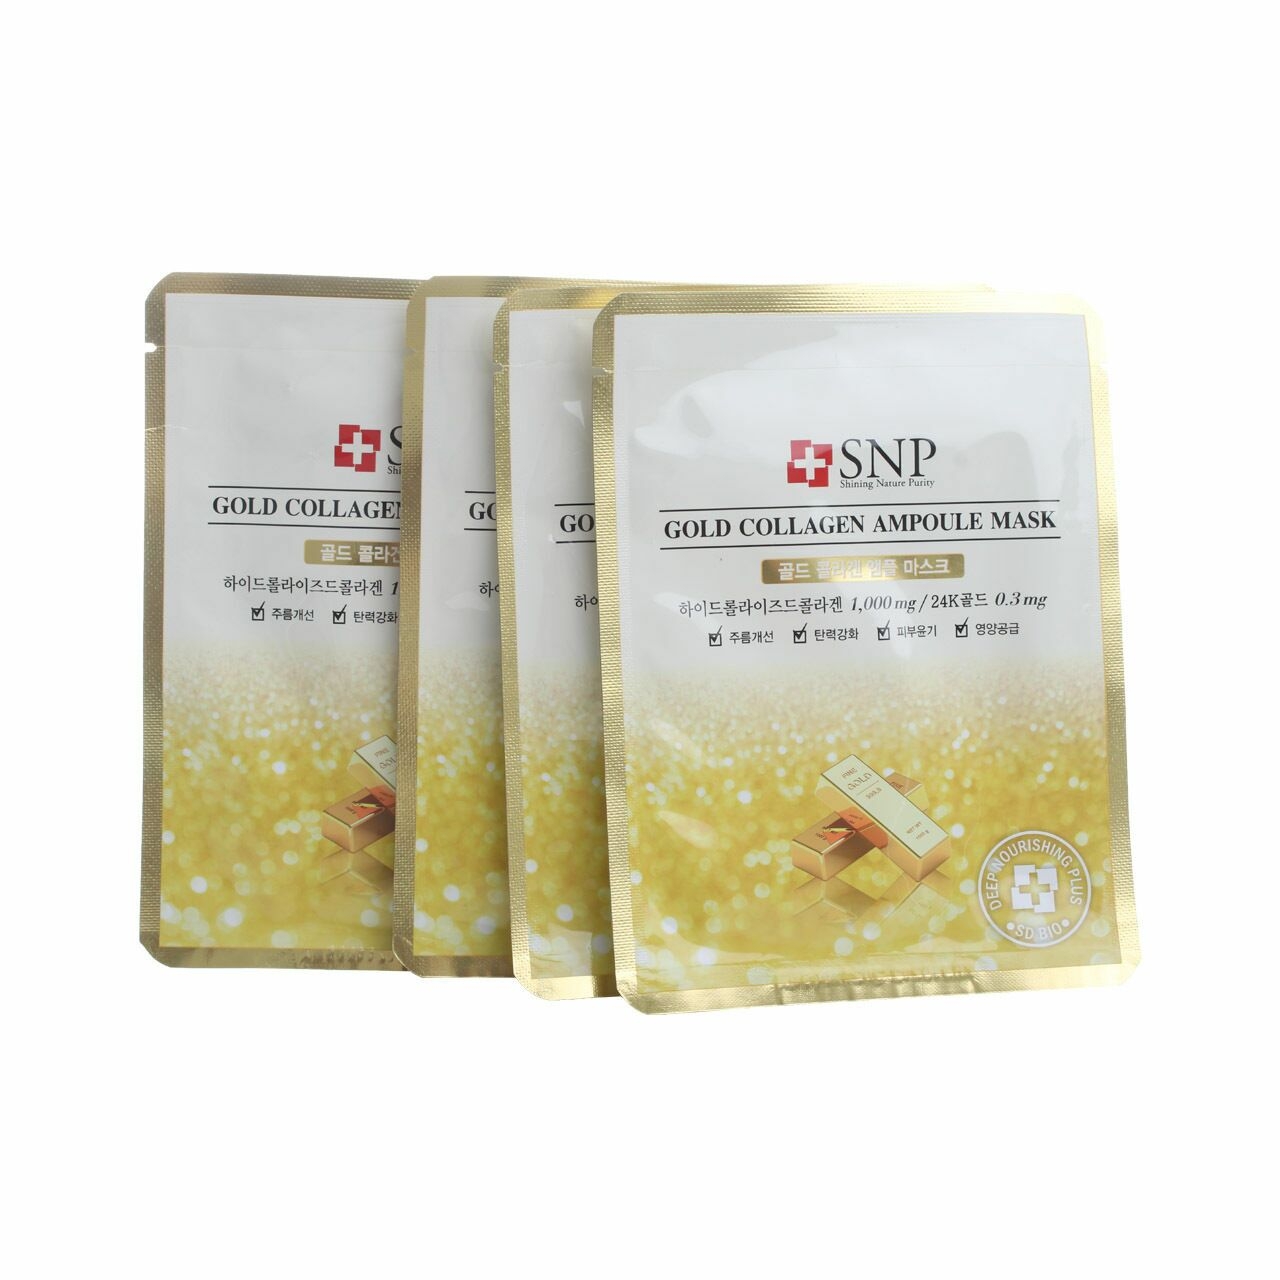 SNP Gold Collagen Ampoule Mask Skin Care